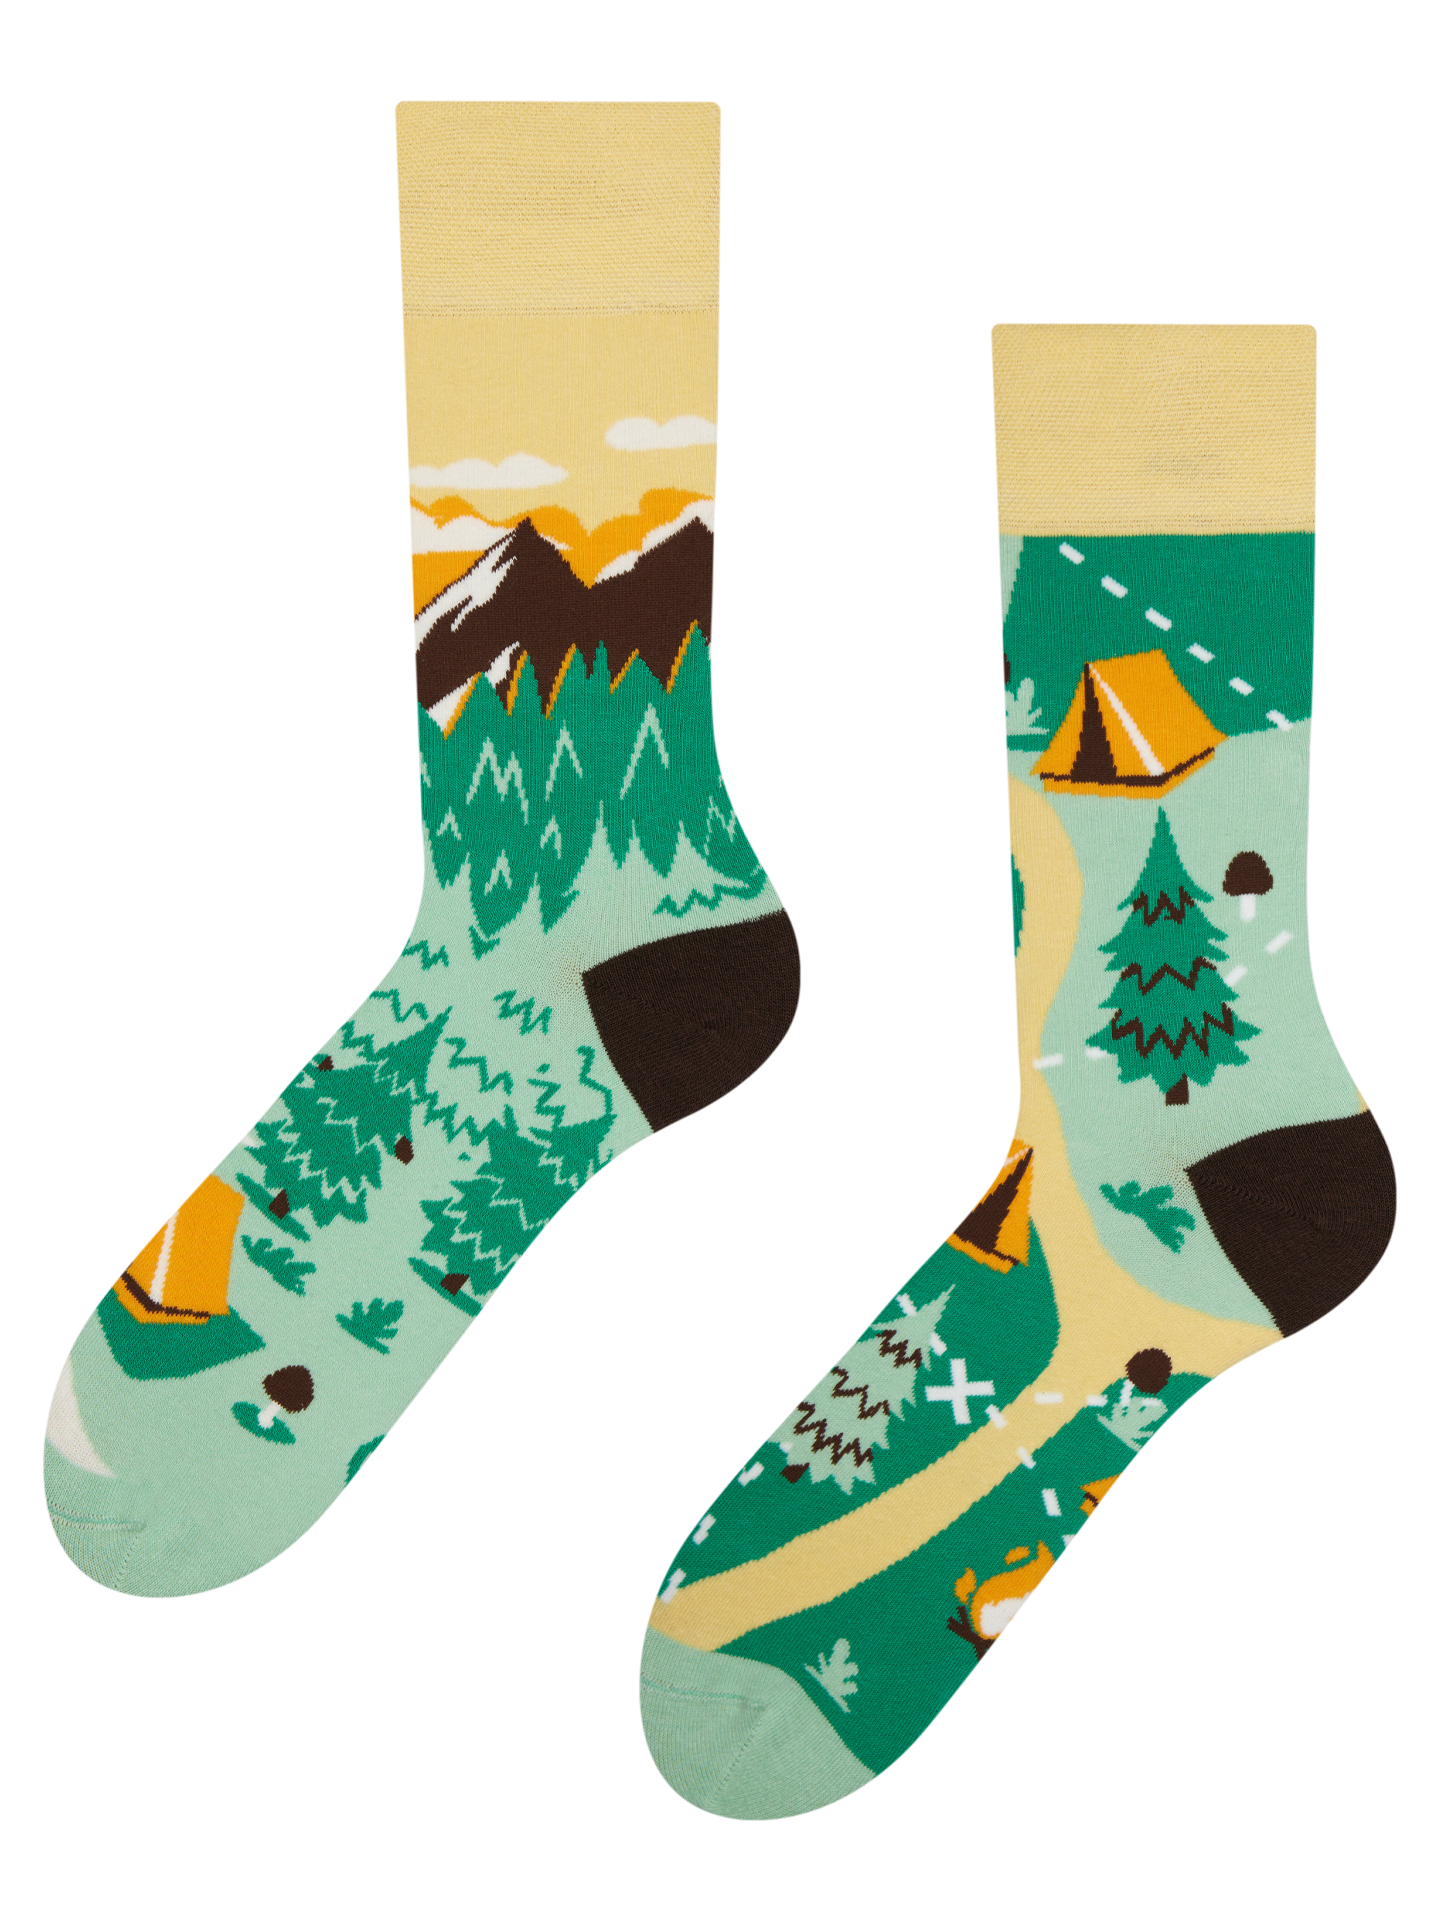 Regular Socks Mountain Camp